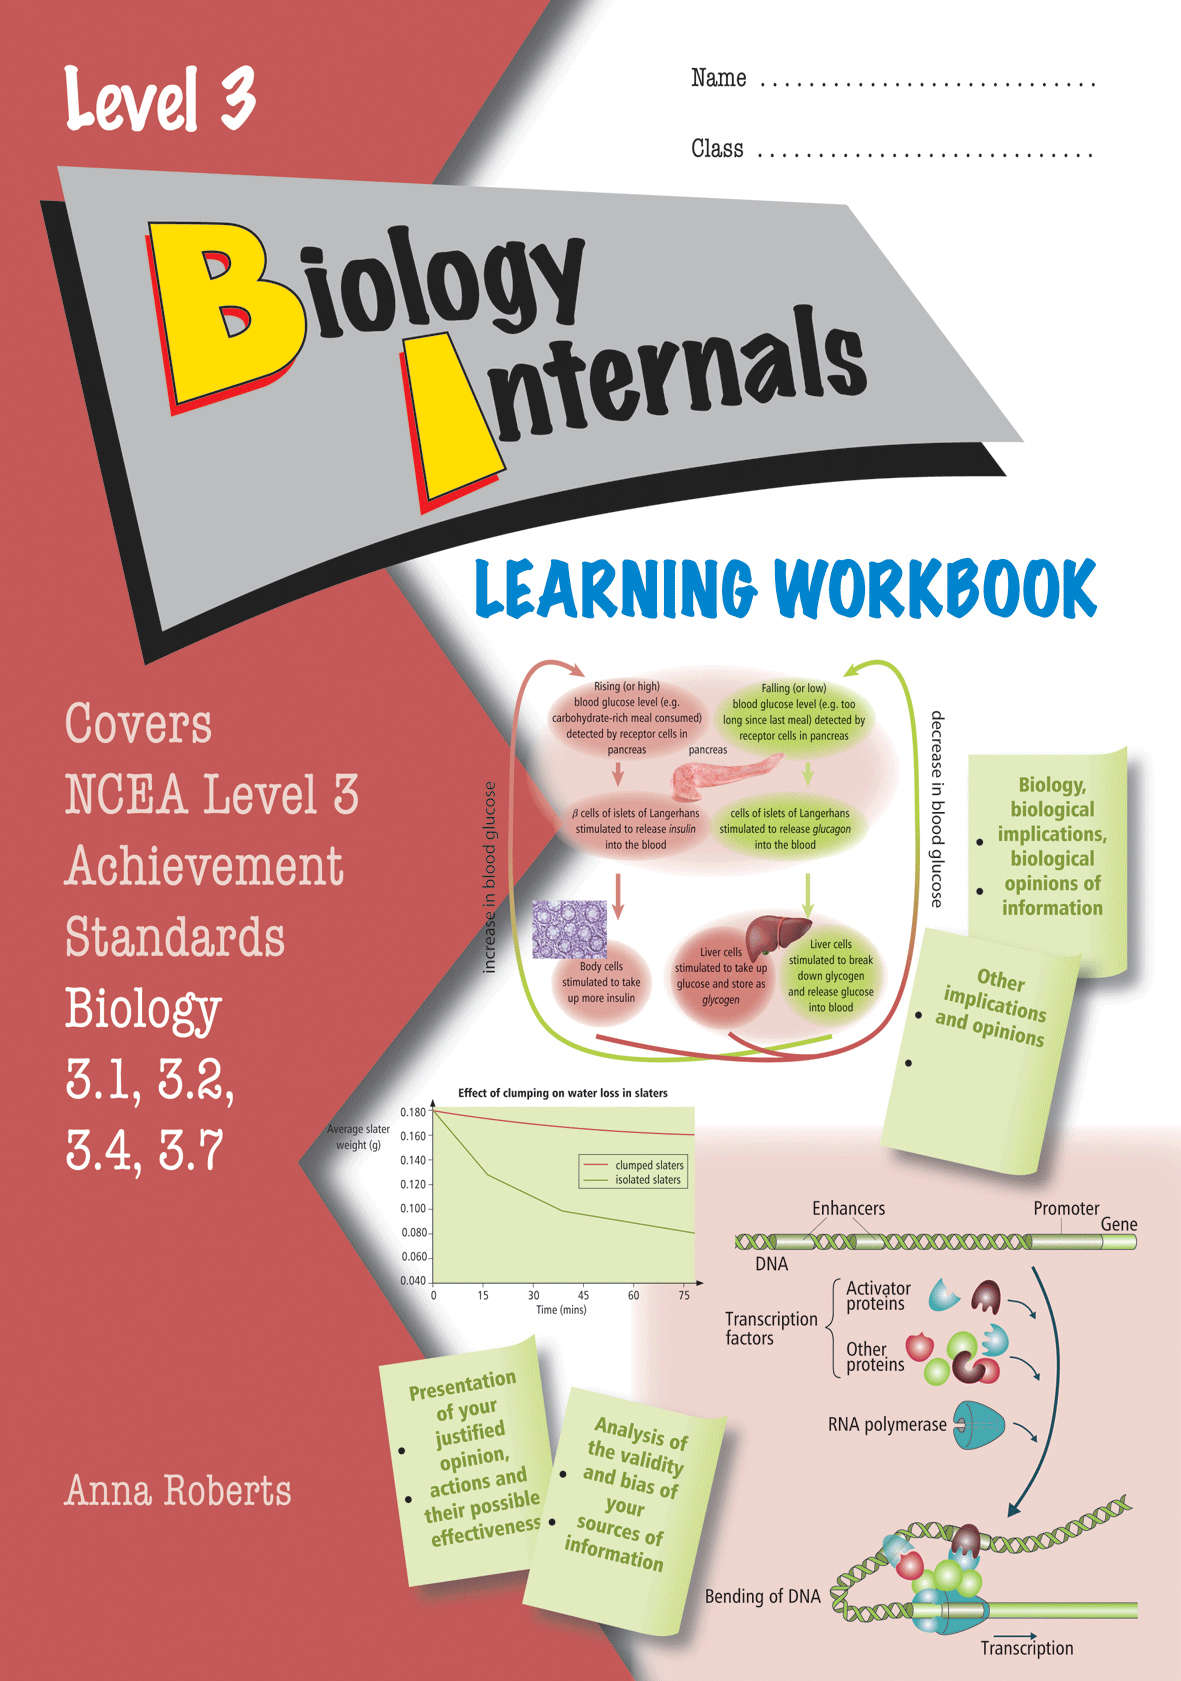 Level 3 Biology Internals Learning Workbook